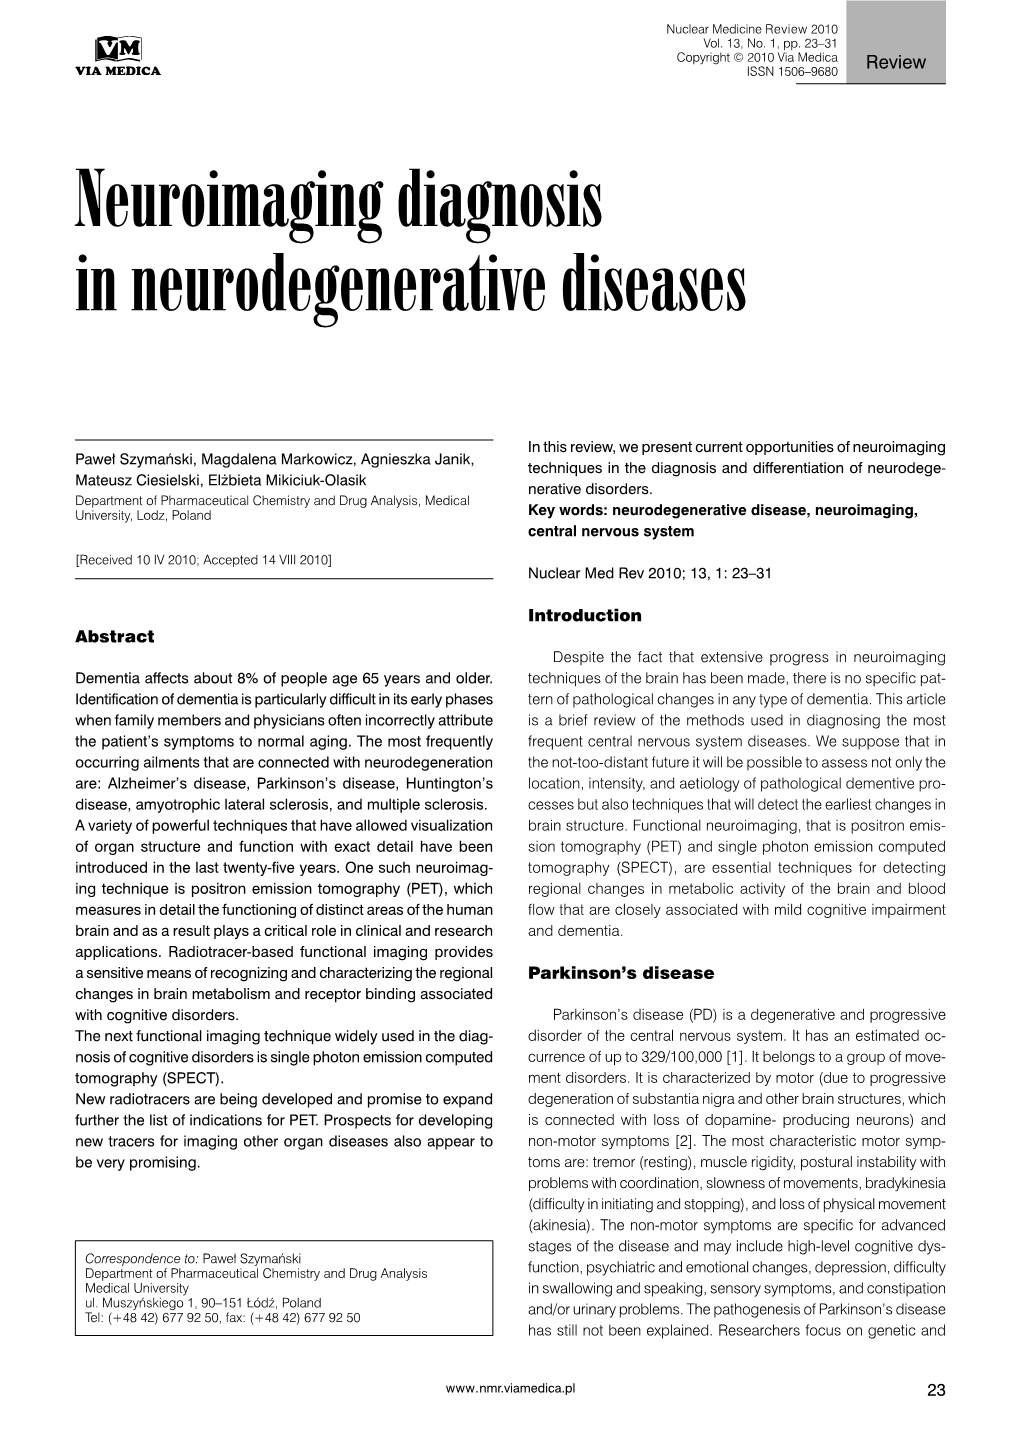 Neuroimaging Diagnosis in Neurodegenerative Diseases